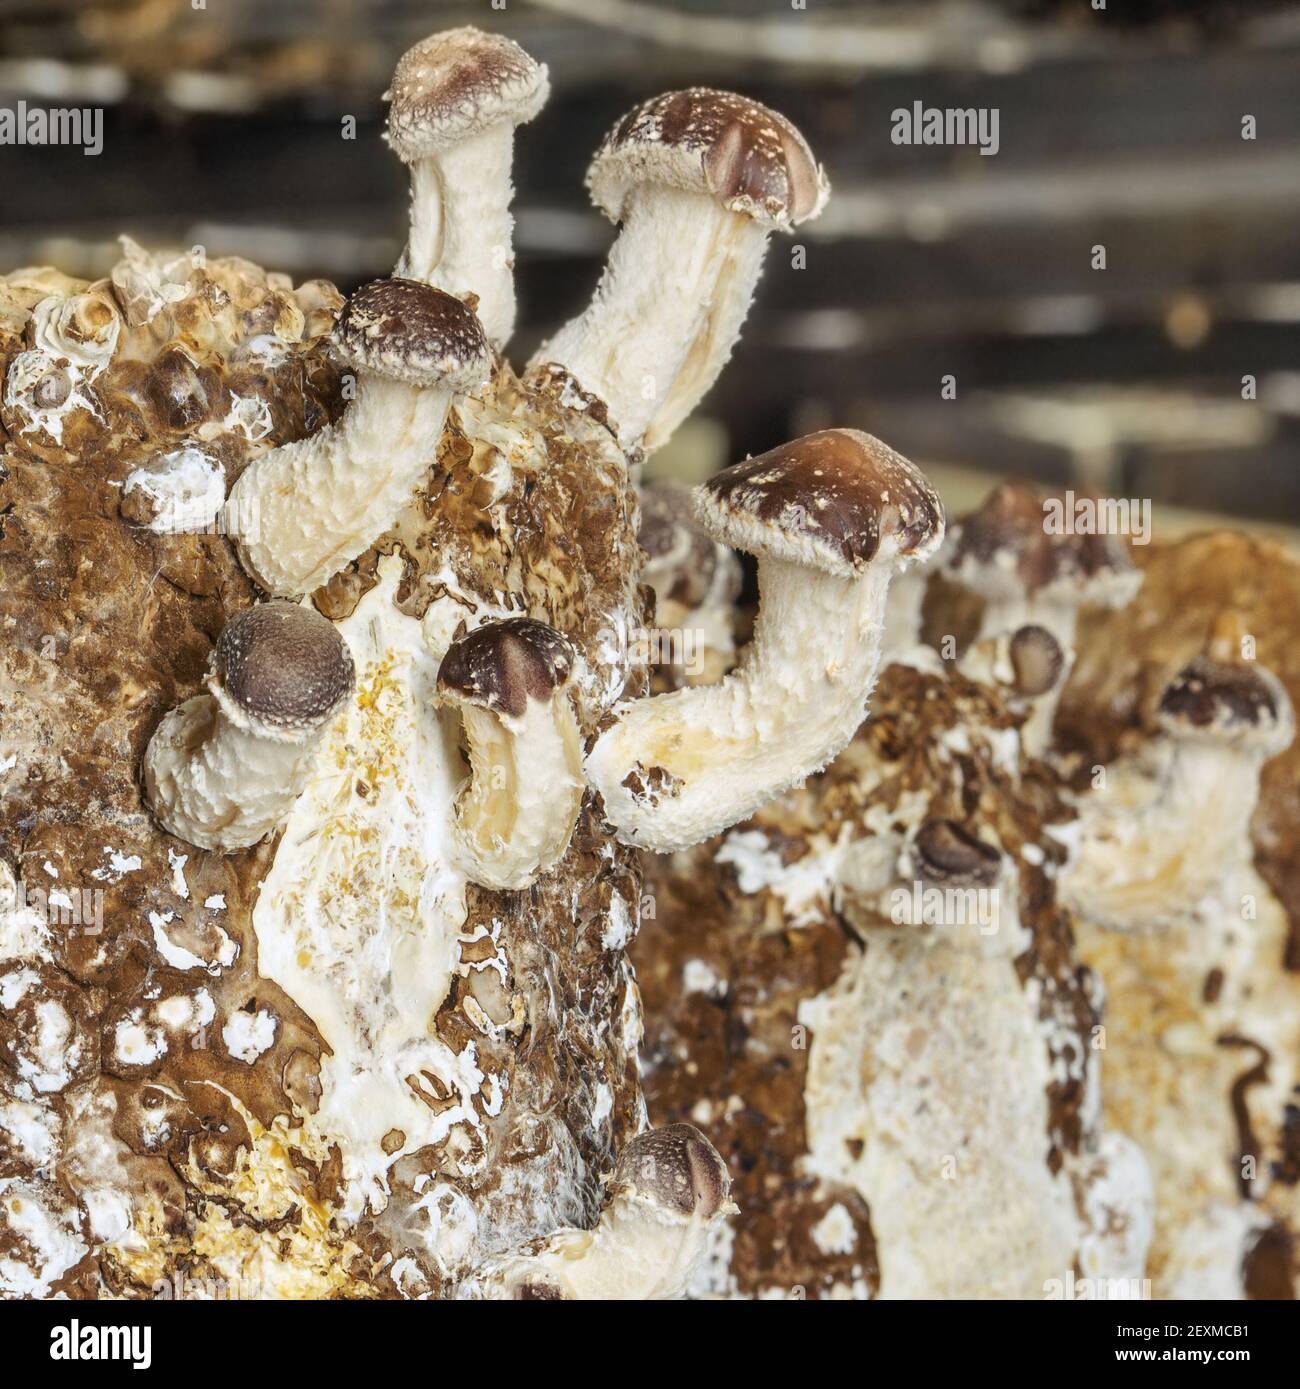 Fragment einer Pilzfarm. Pilzblöcke und junge Shiitake-Pilze. Stockfoto